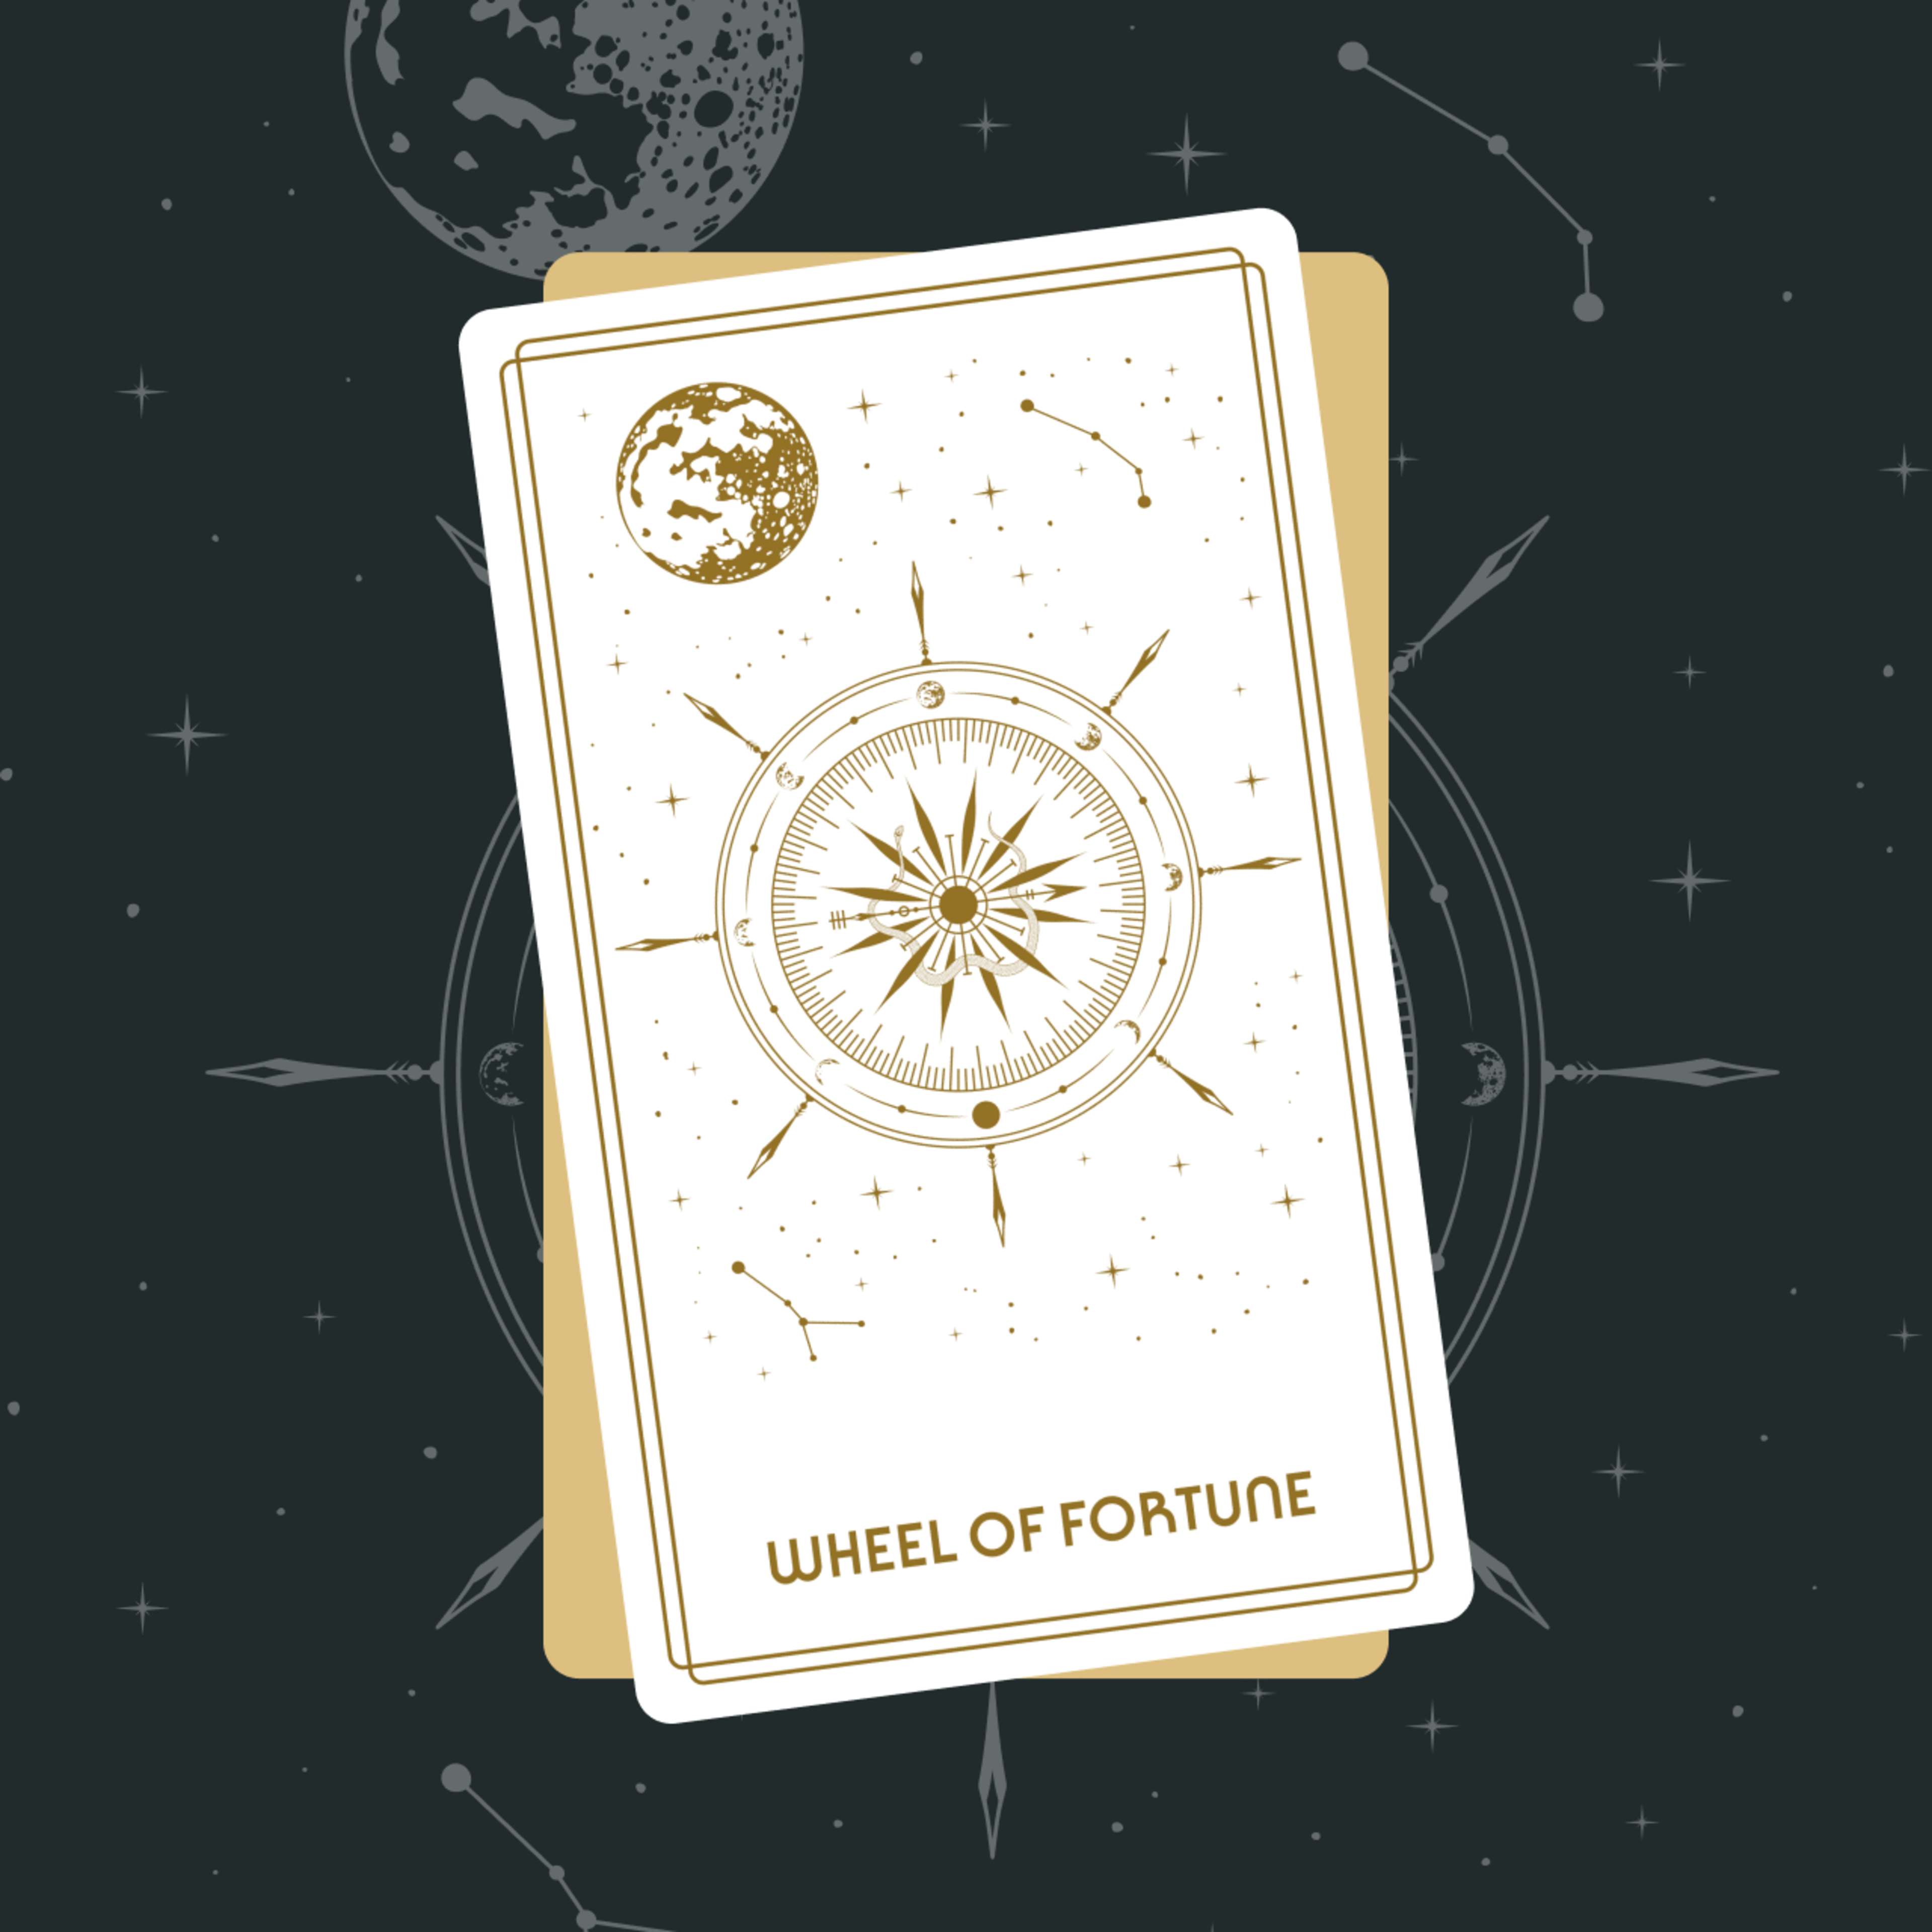 Wheel of Fortune Tarot Card (Major Arcana #10)